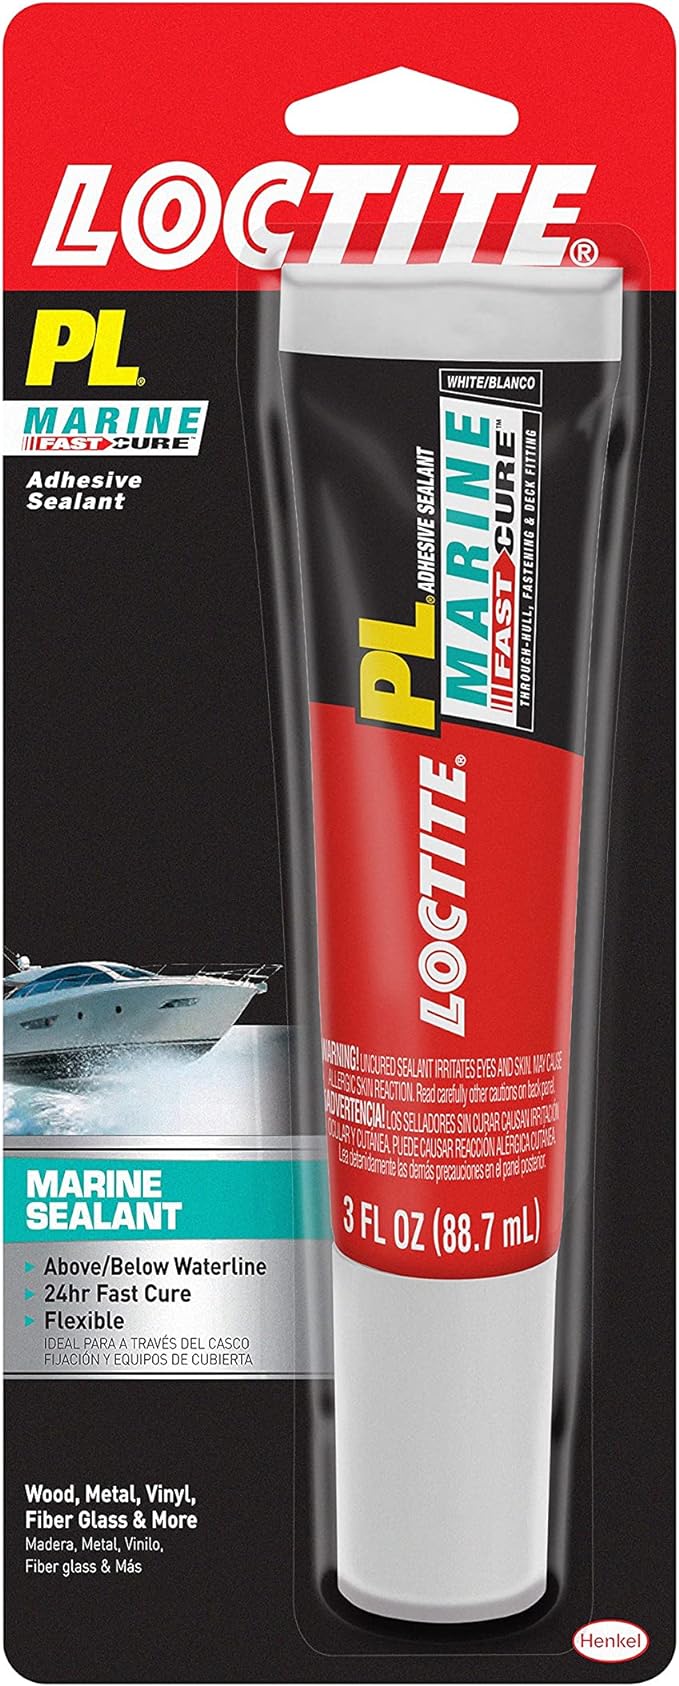 Loctite PL Marine Fast Cure Adhesive Sealants, Waterproof Construction Glue for Fiberglass, Vinyl, Glass & More - 3 fl oz Cartridge, Pack of 1